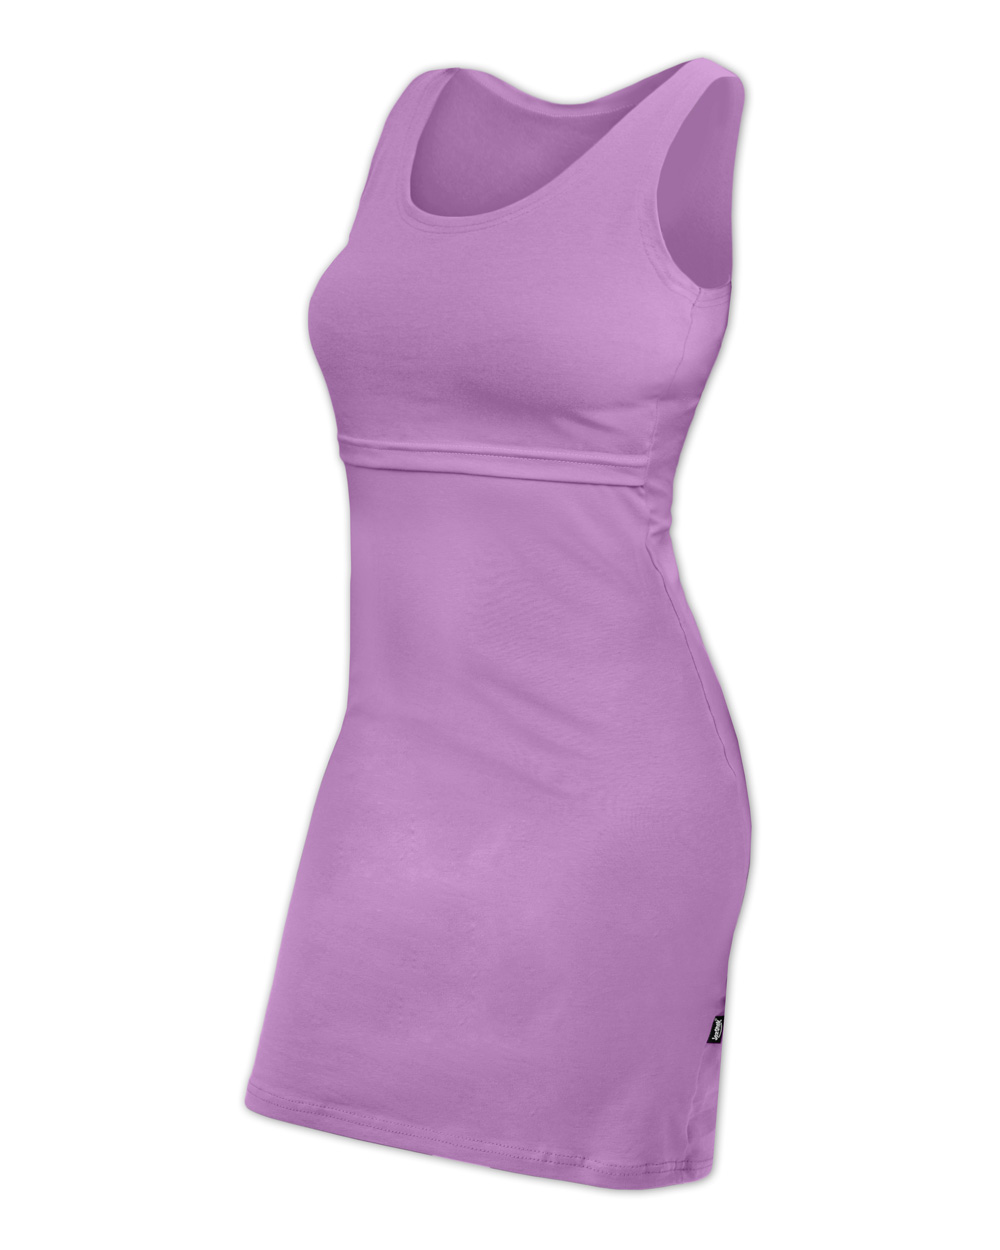 Breast-feeding dress Elena, short sleeves, purple